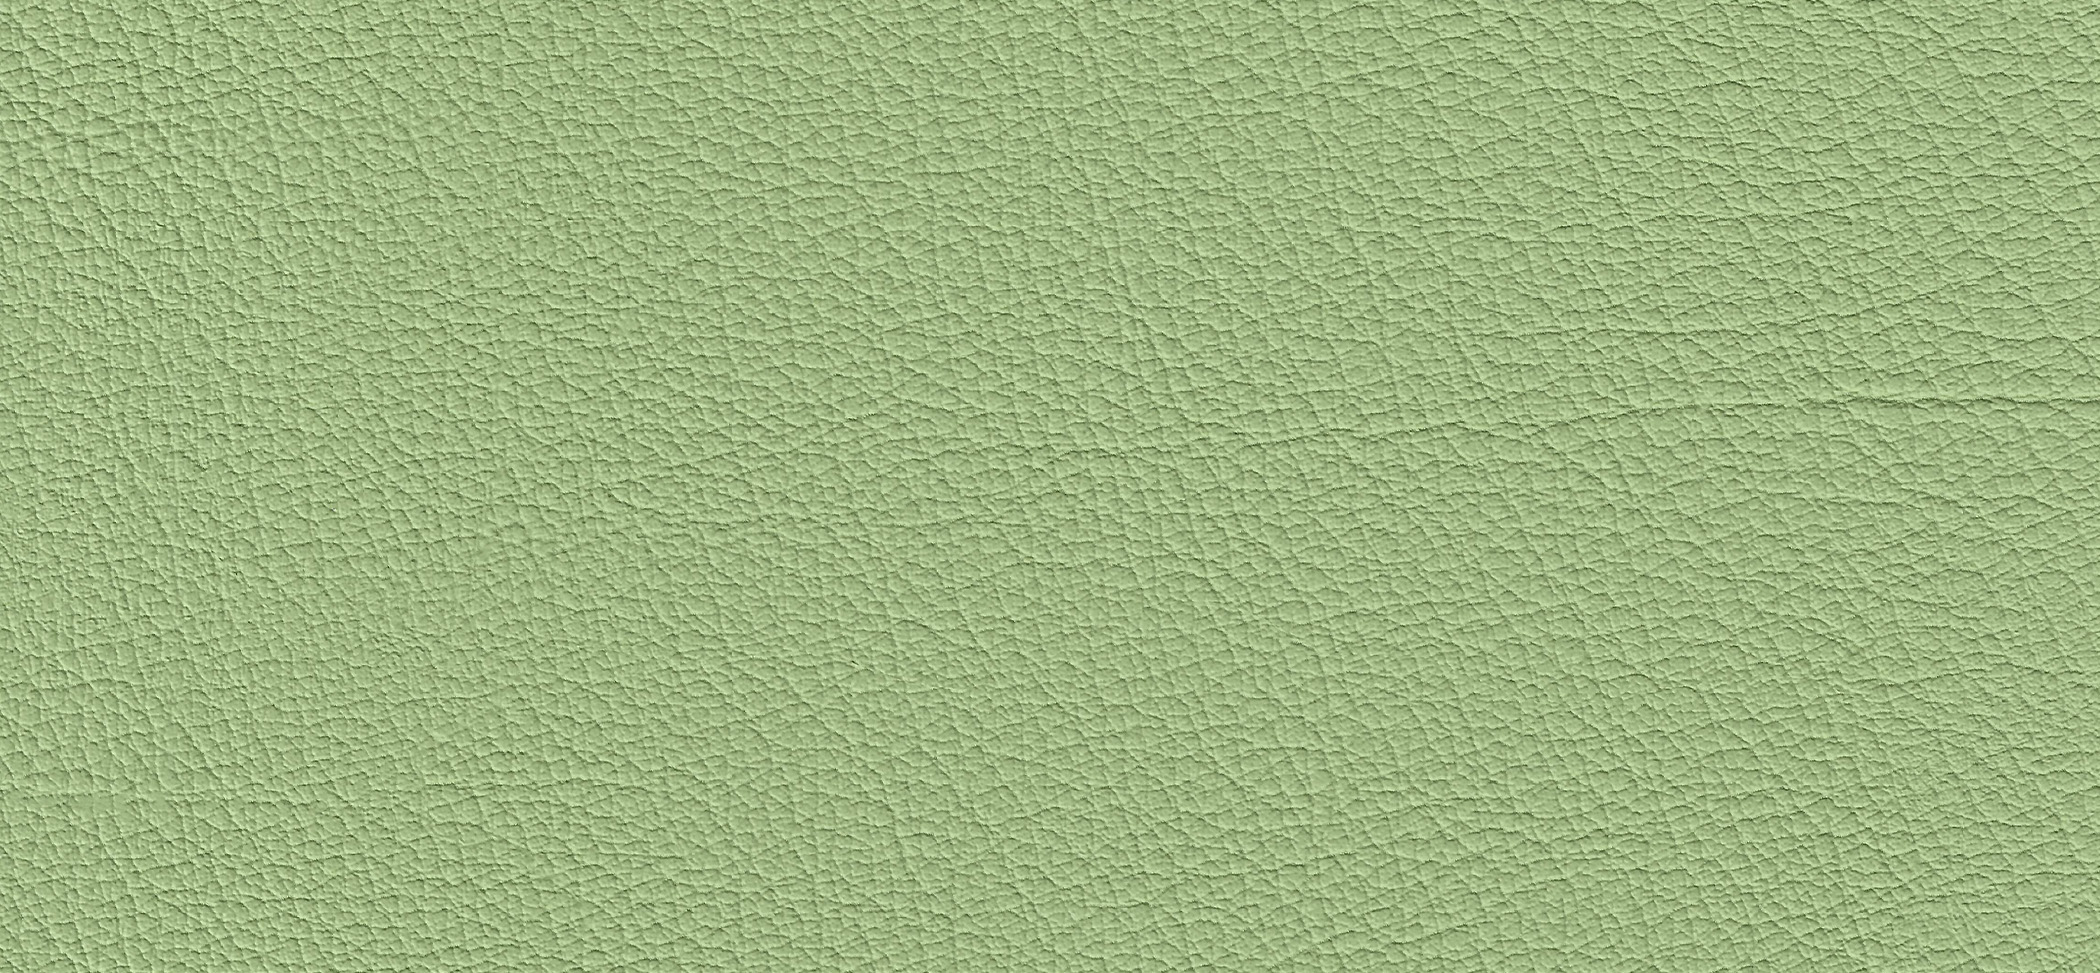 Tiffany lime green (313.342.01)